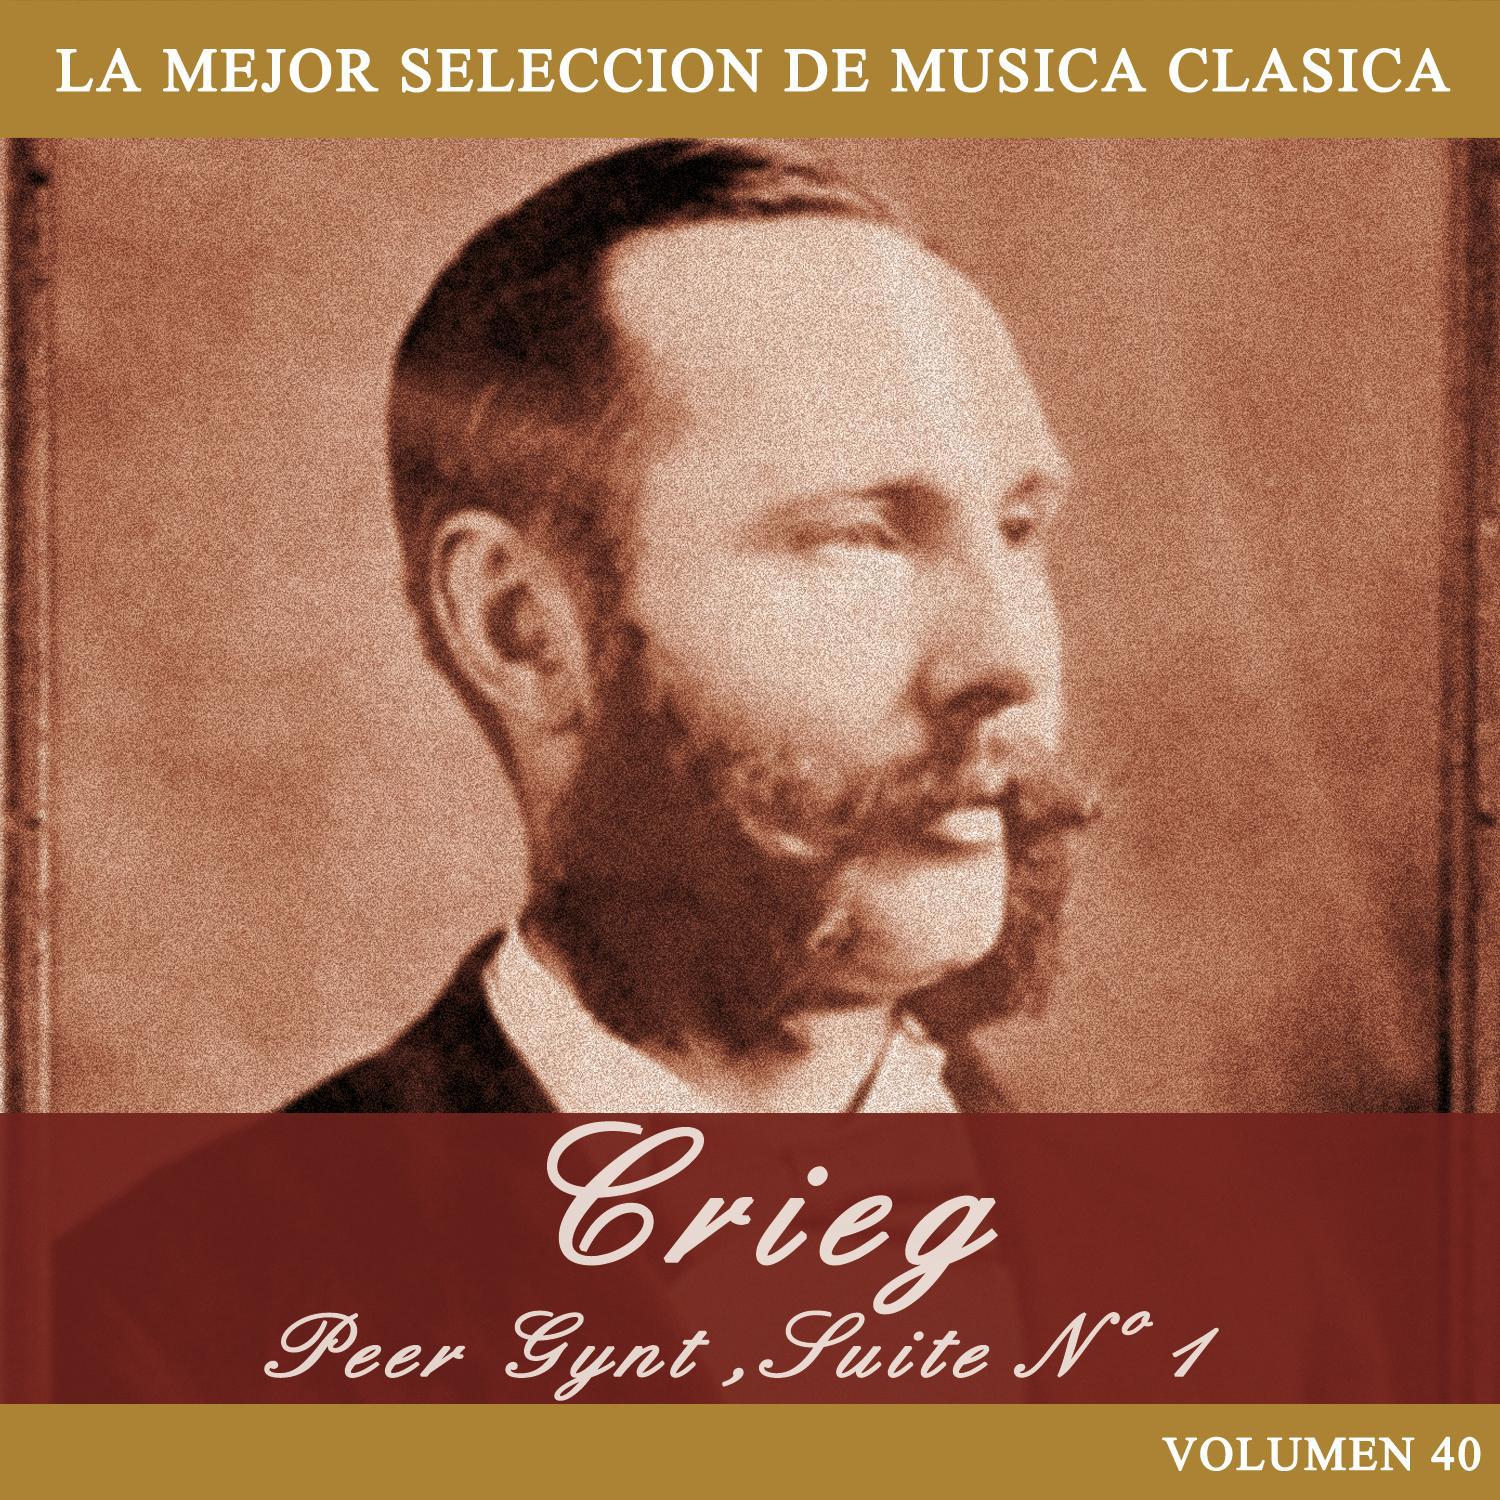 Grieg: Peer Gynt, Suite No. 1